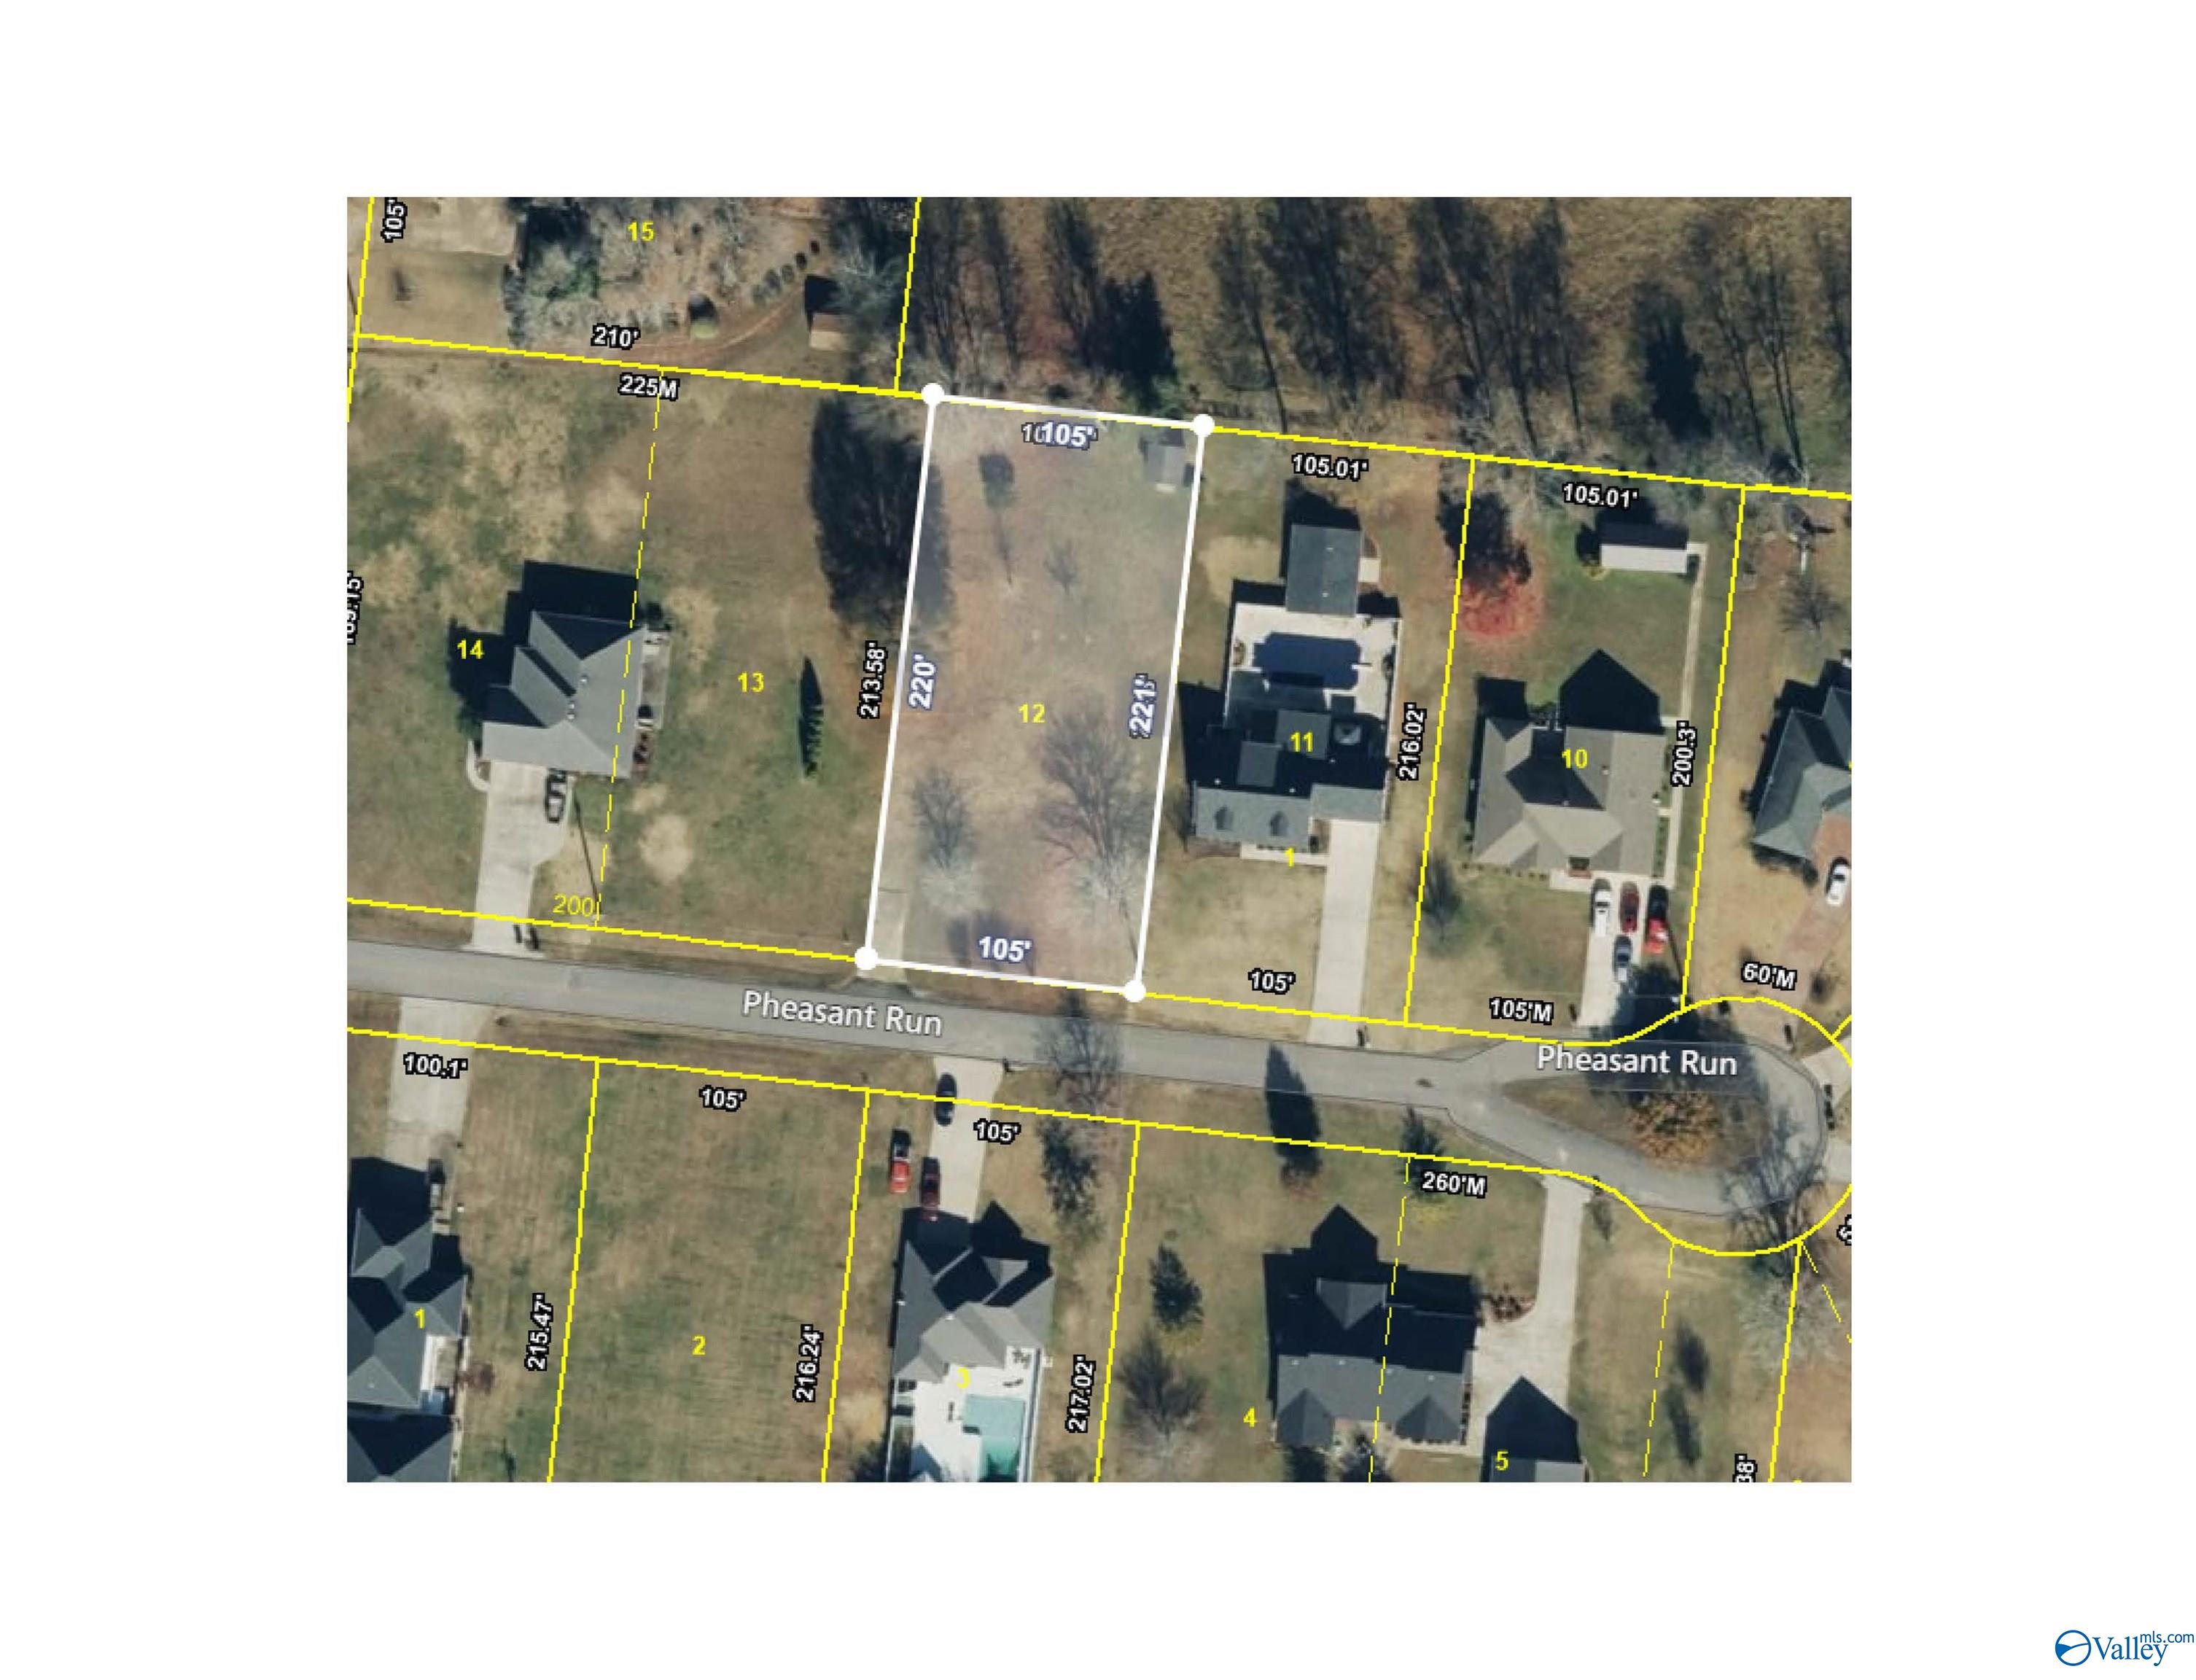 Property: 26081 Pheasant Run,Ardmore, TN